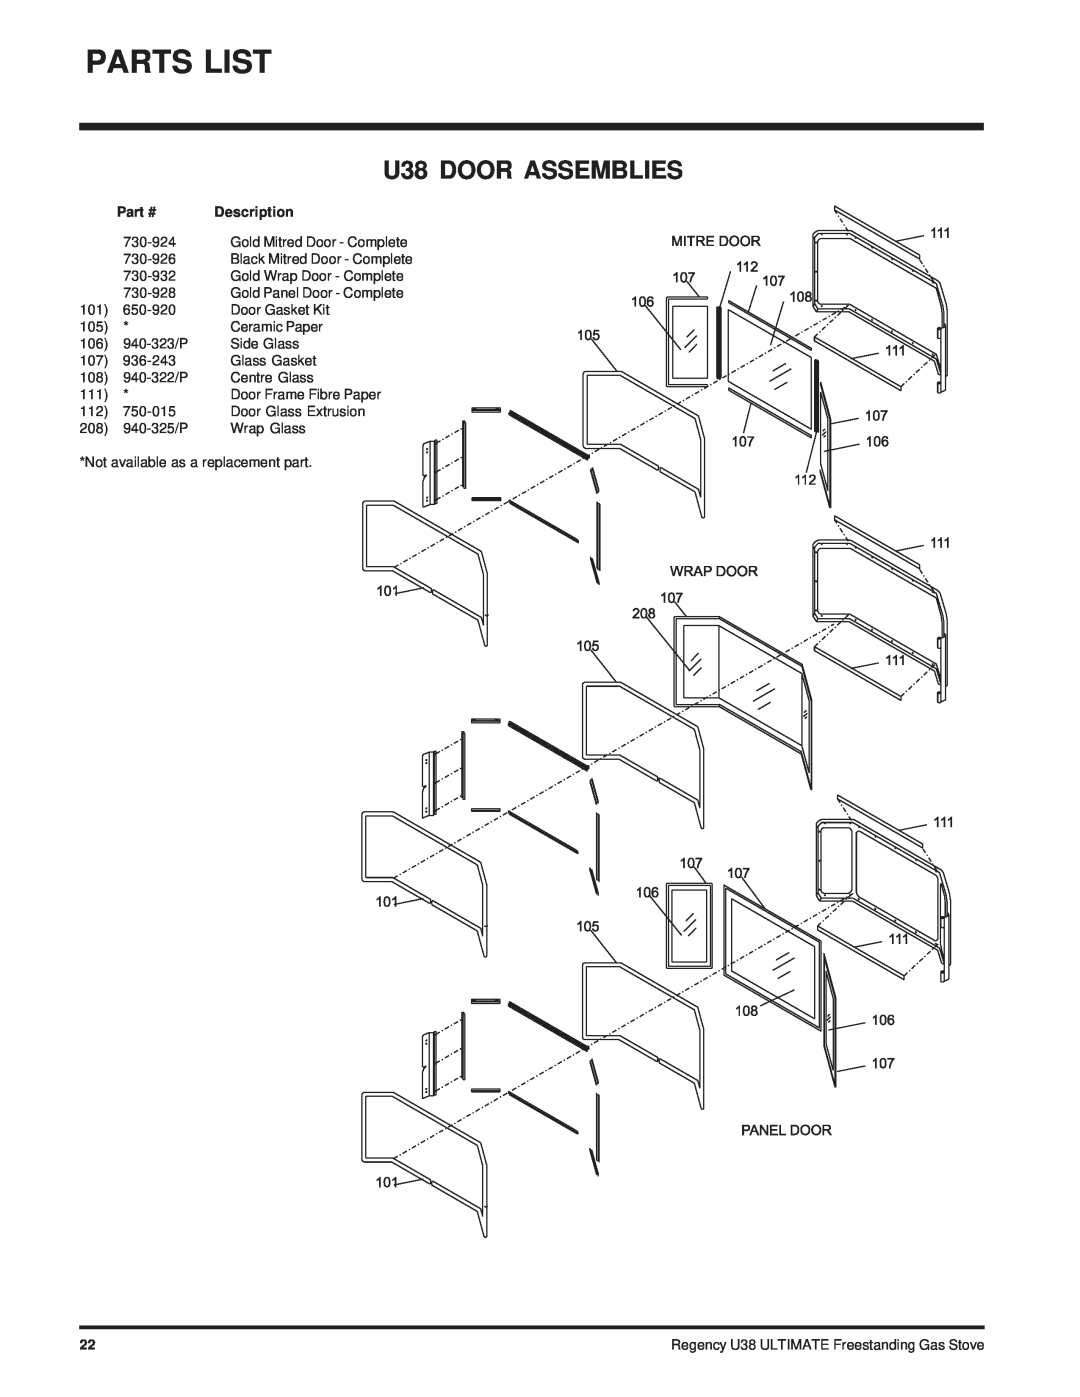 Regency Wraps U38-NG, U38-LP Parts List, U38 DOOR ASSEMBLIES, Description, Regency U38 ULTIMATE Freestanding Gas Stove 